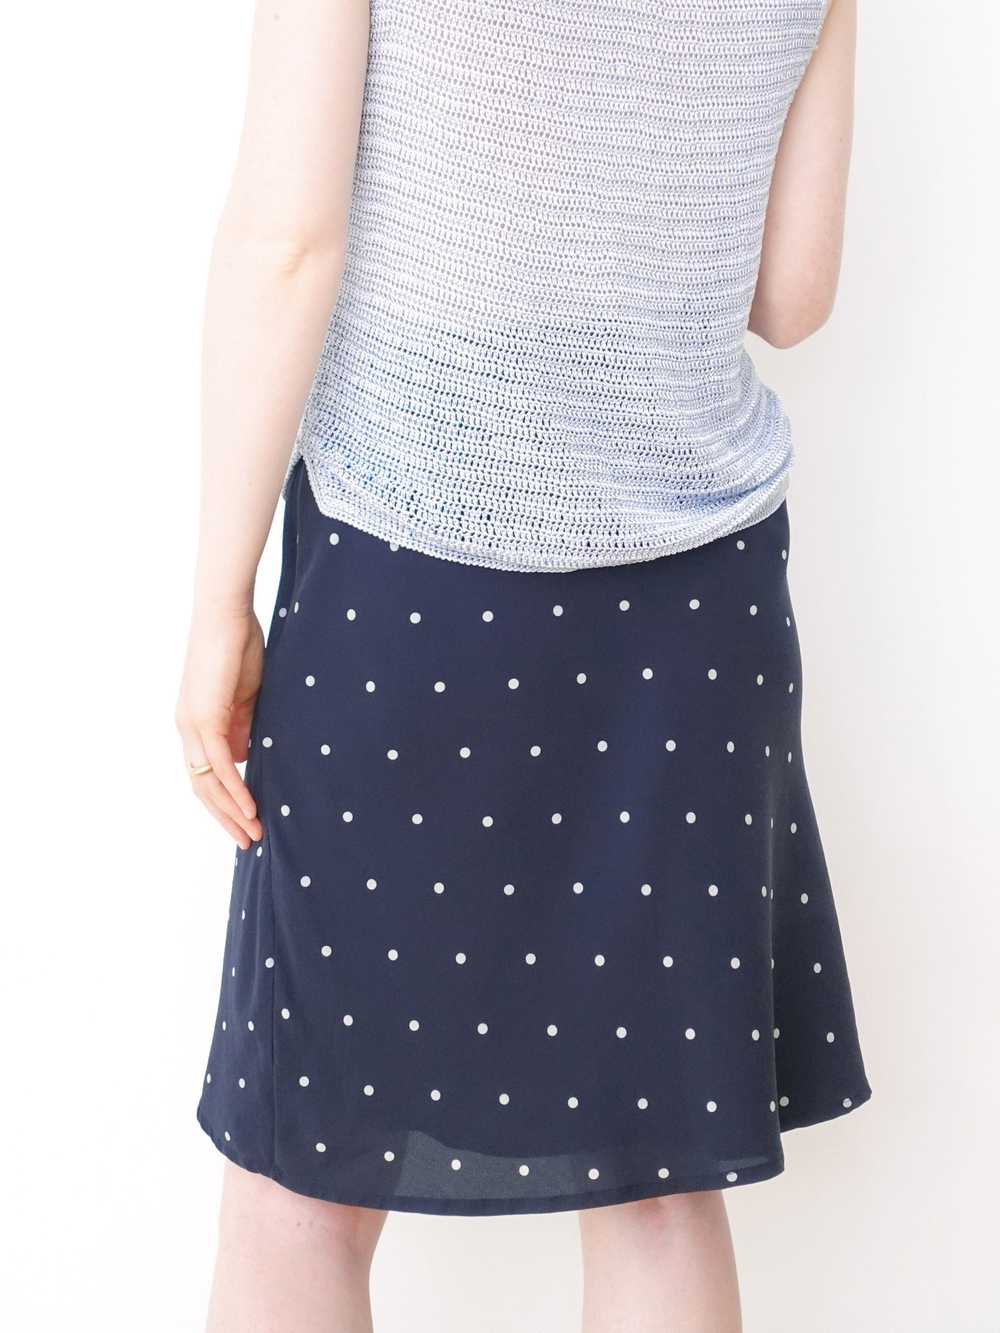 Silk Navy and White Polka Dot Skirt - image 2